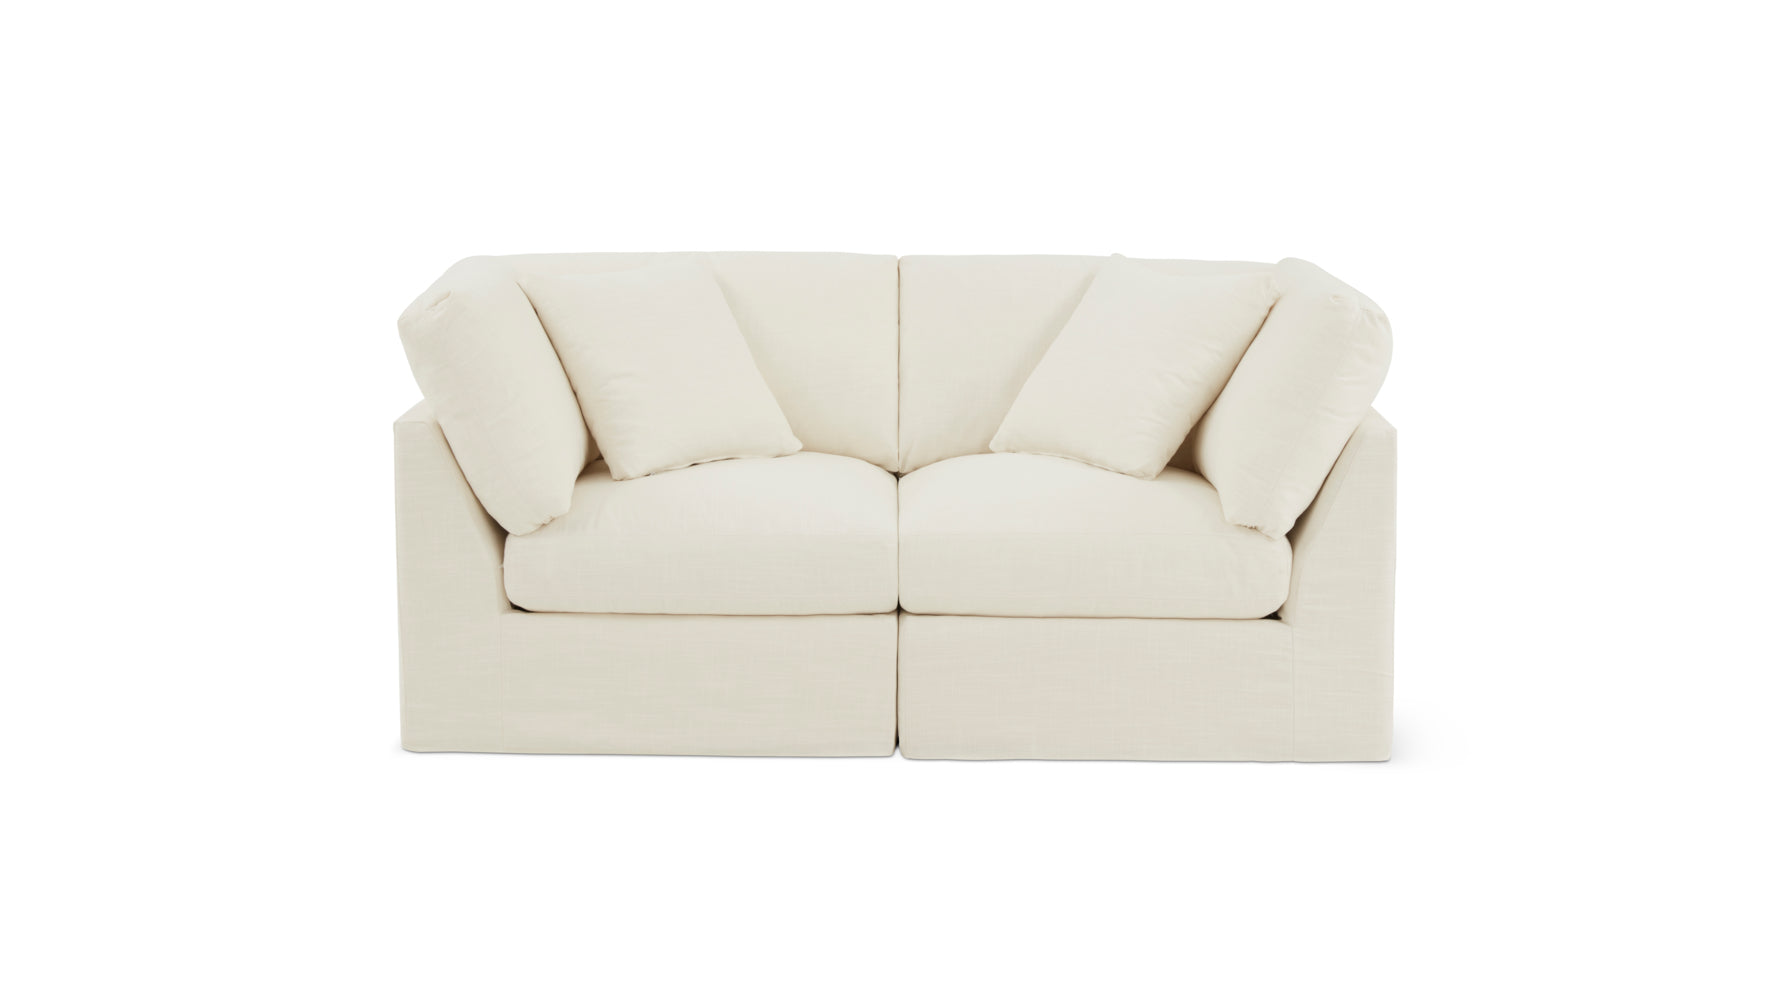 Get Together™ 2-Piece Modular Sofa, Standard, Cream Linen - Image 1